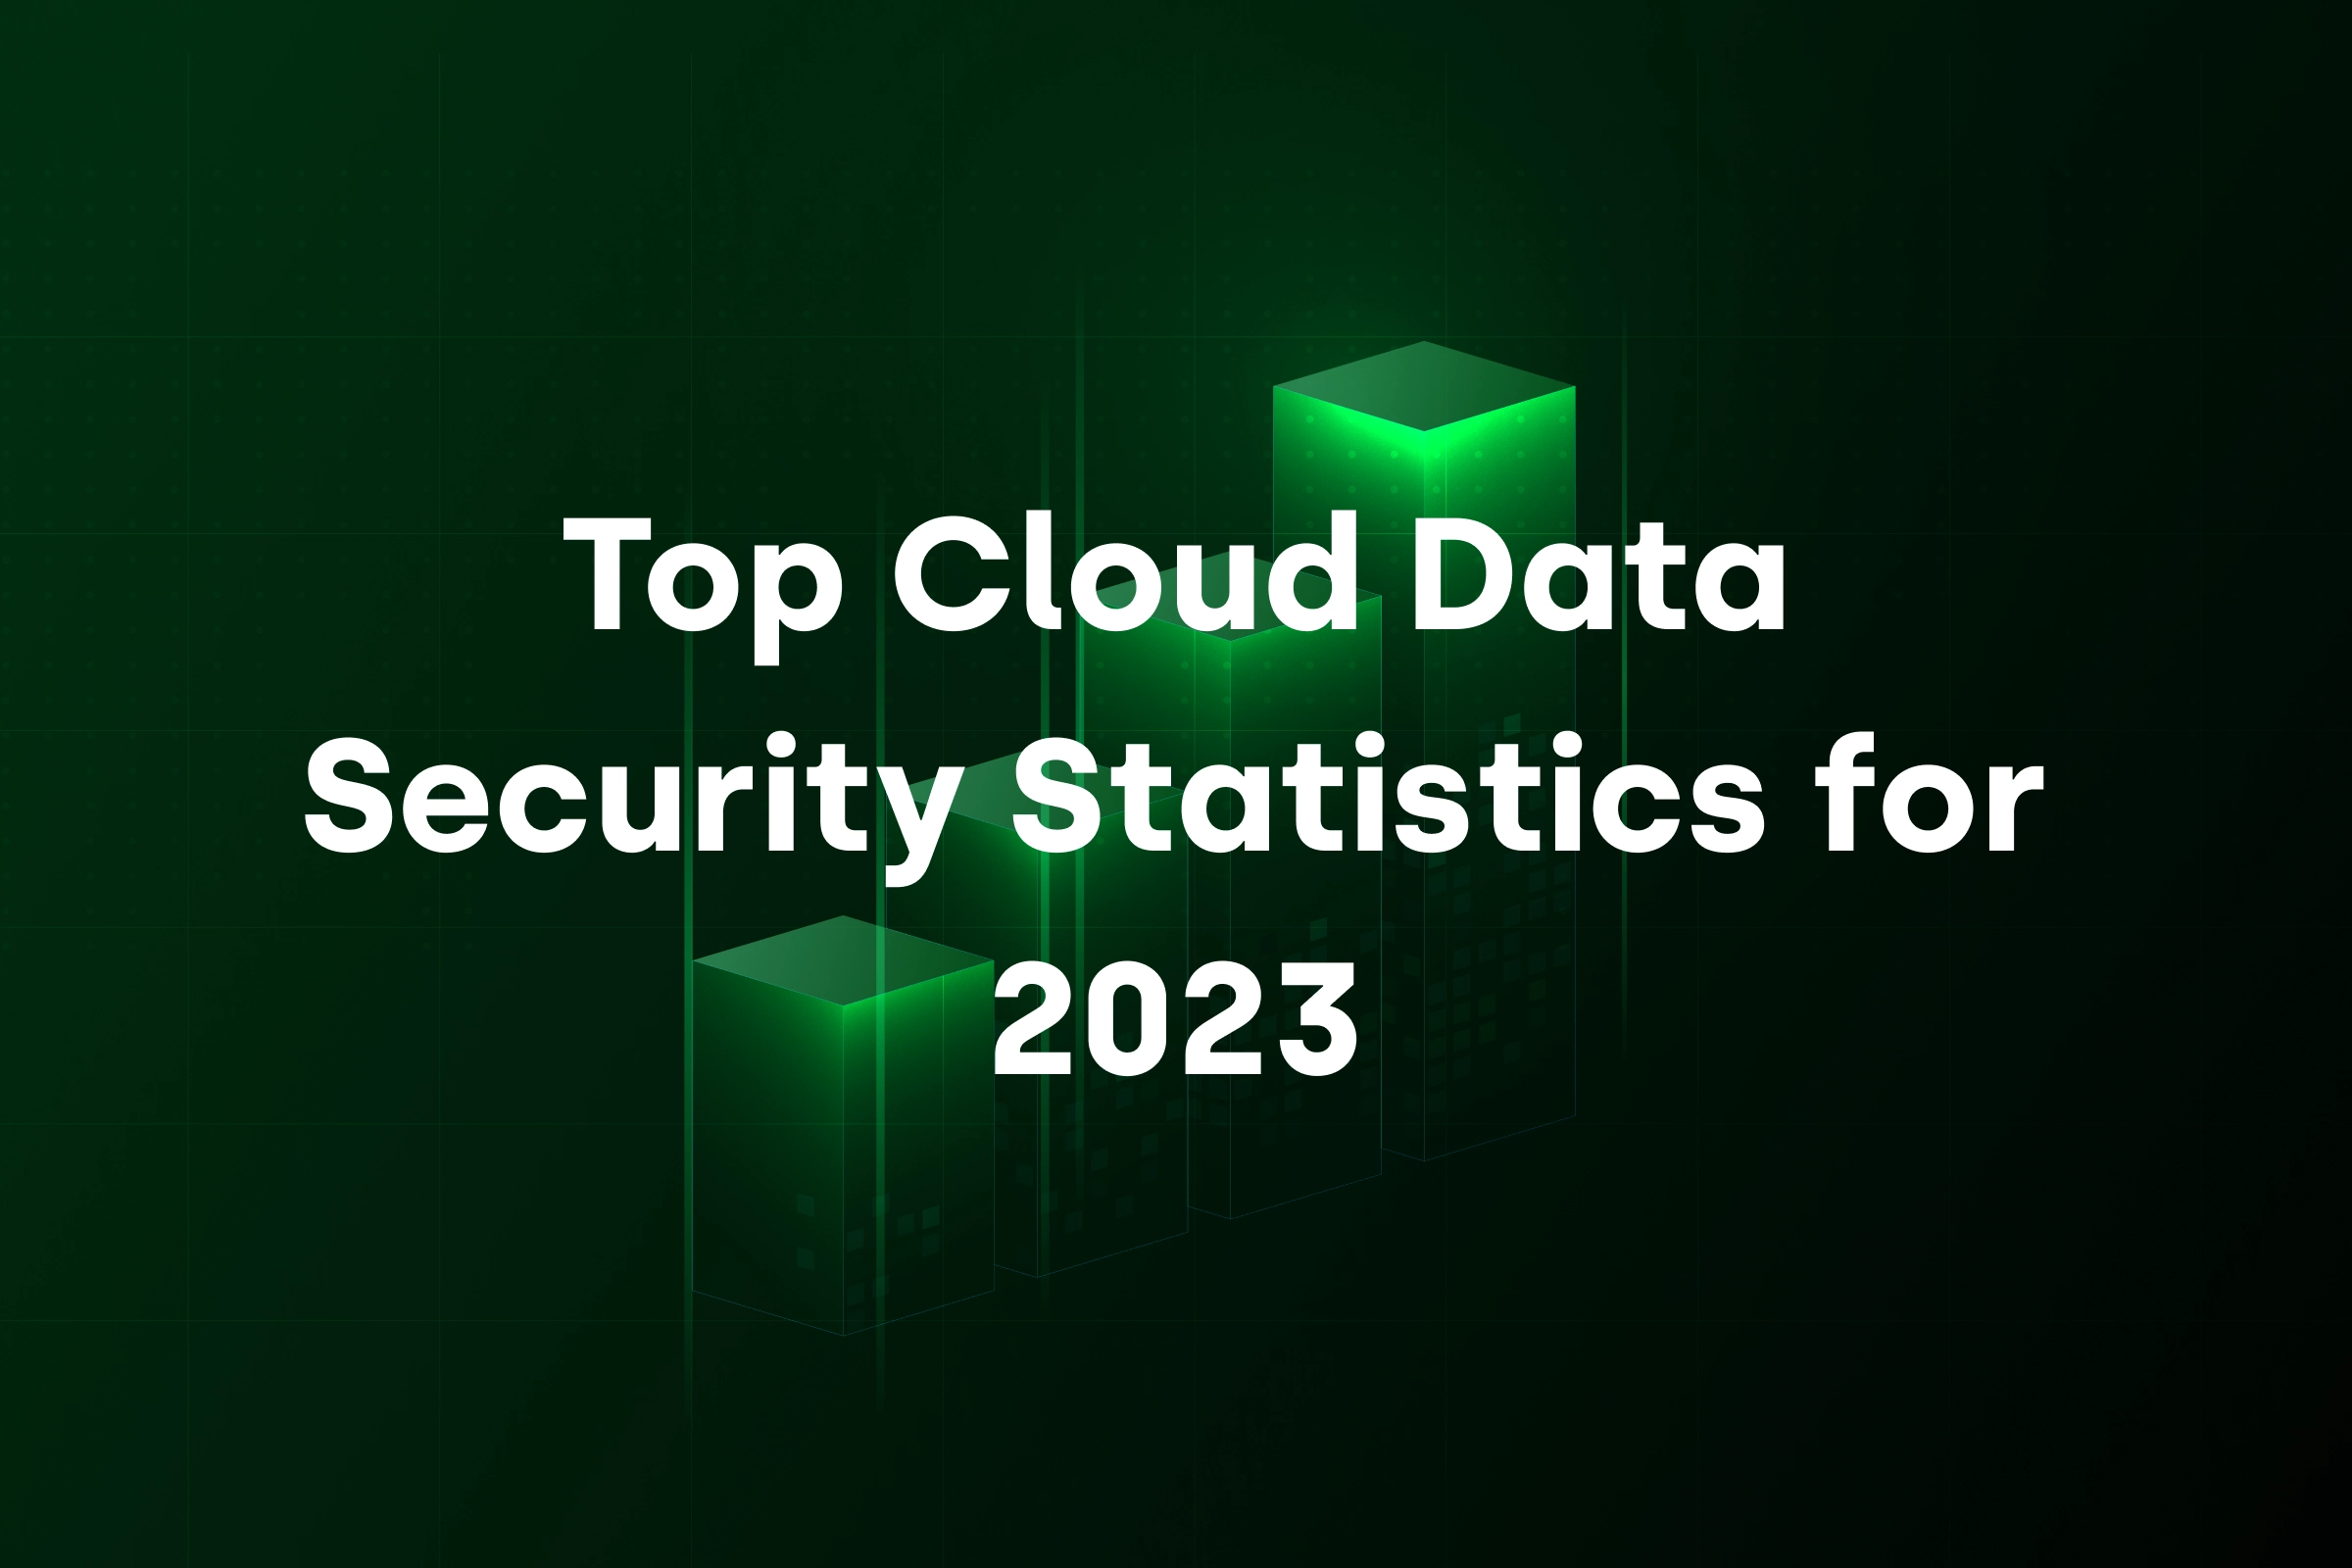 Top Cloud Data Security Statistics for 2023